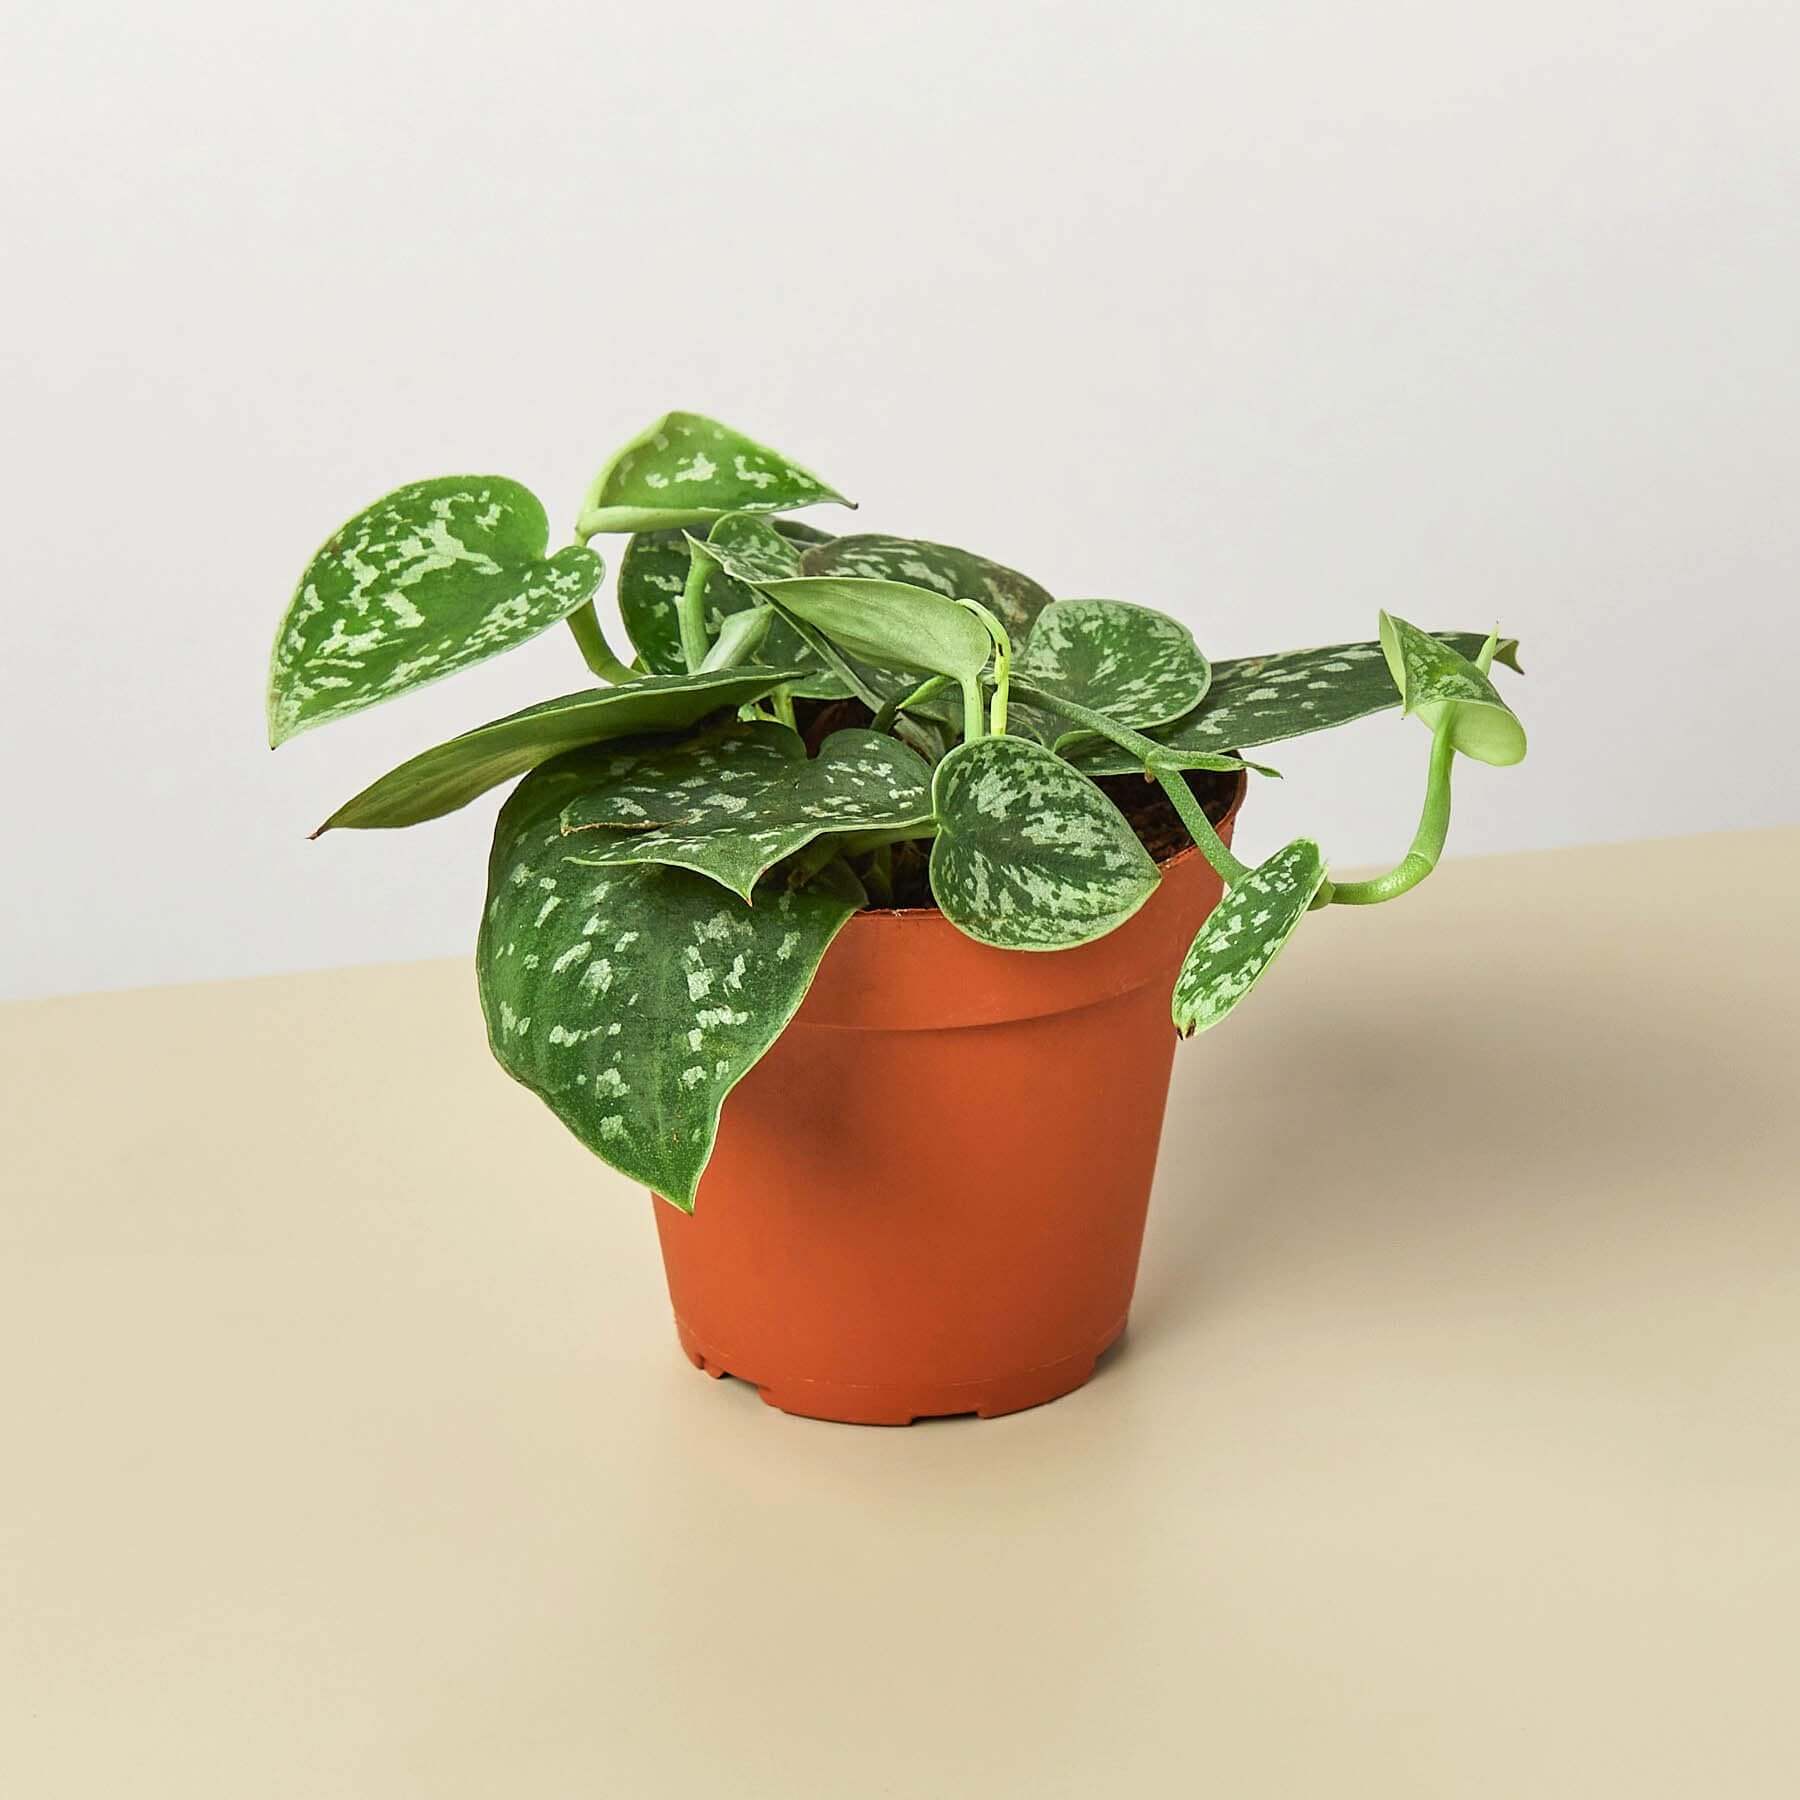 Satin Pothos | Modern house plants that clean the air